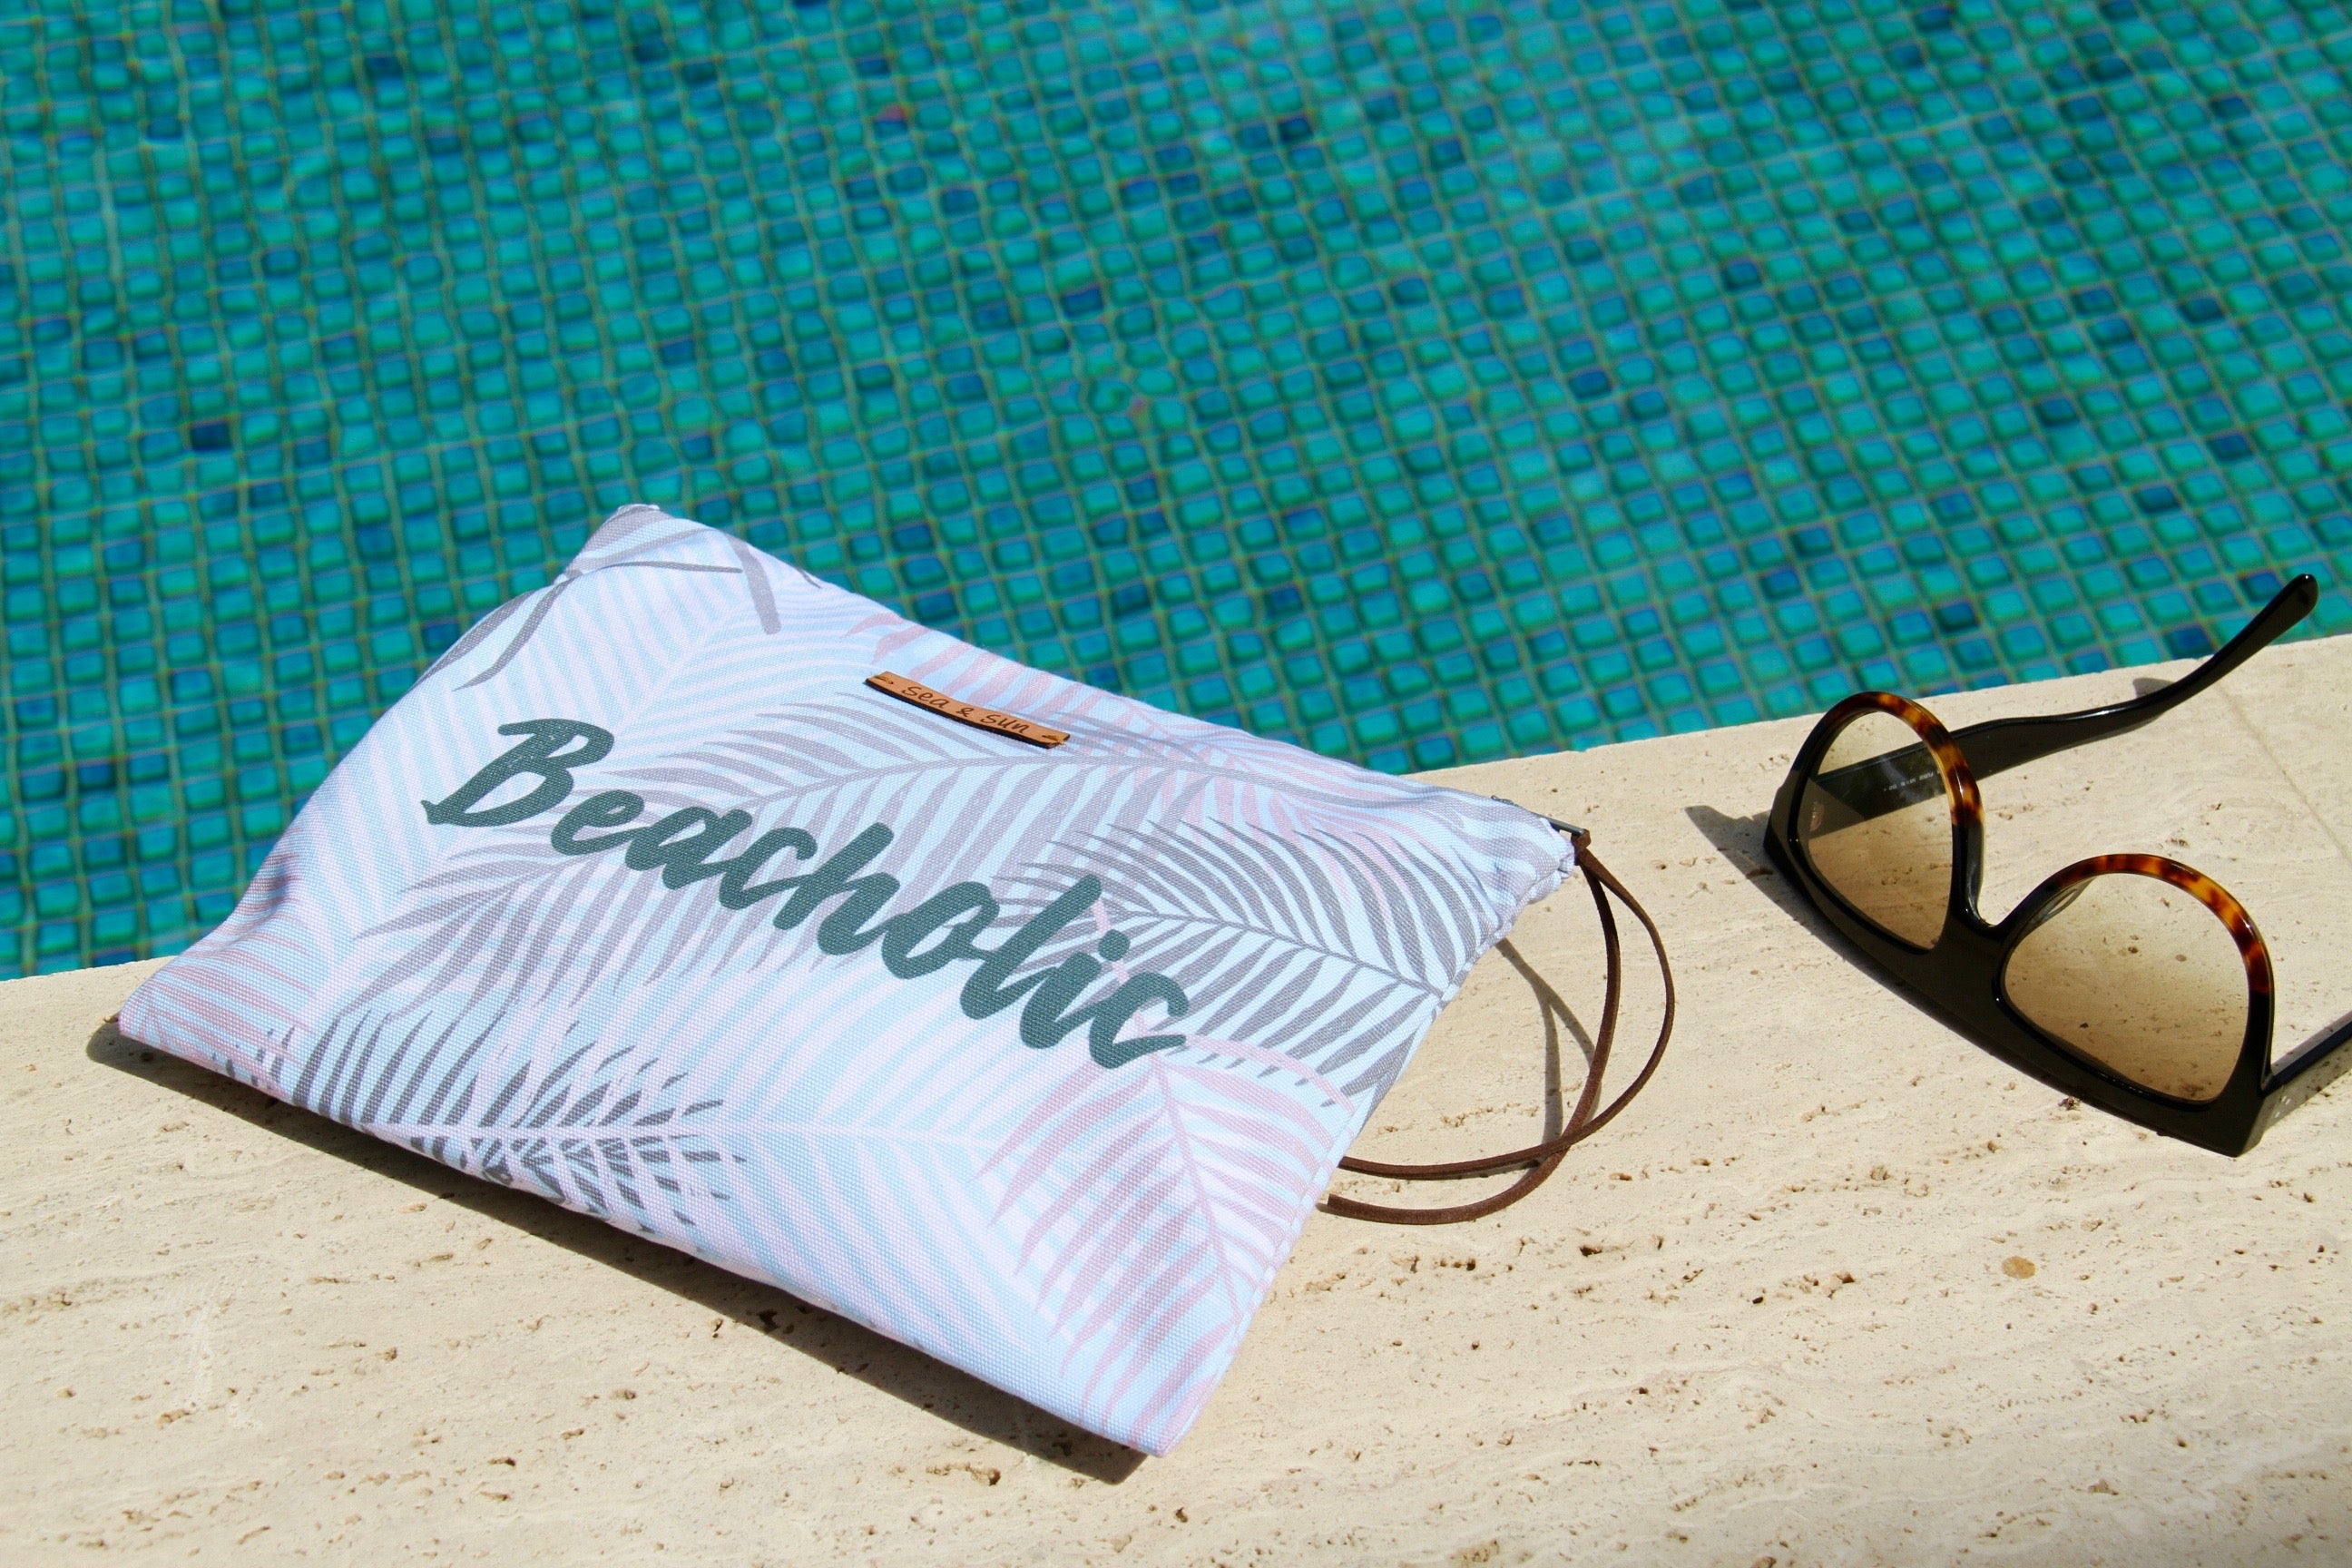 Beacholic Waterproof lined Bag for the Beach, Pool, Travel or Makeup - Kardia